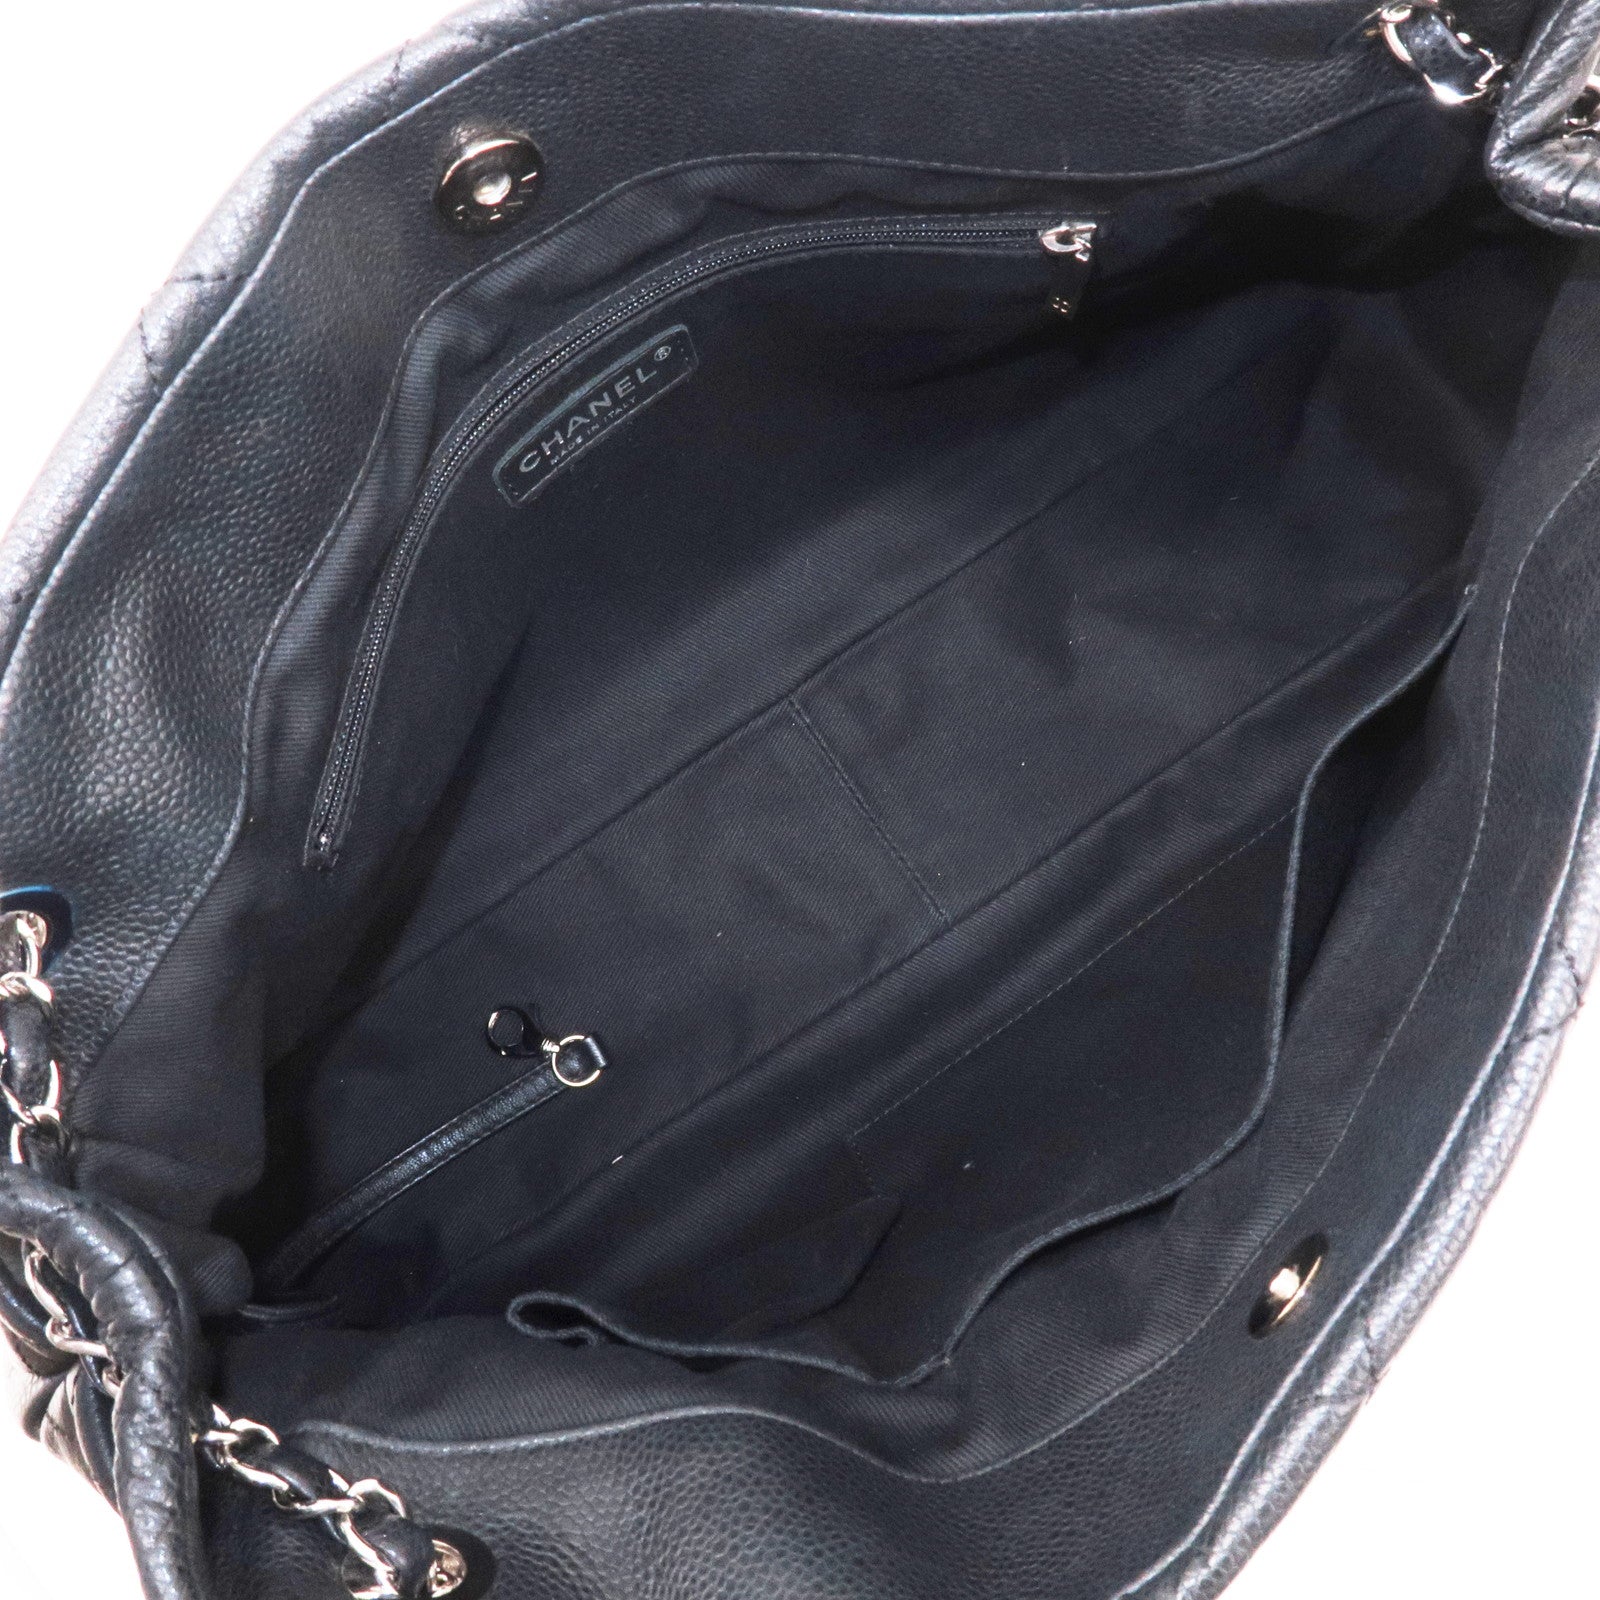 Chanel Matelasse Caviar Skin Chain Tote Bag